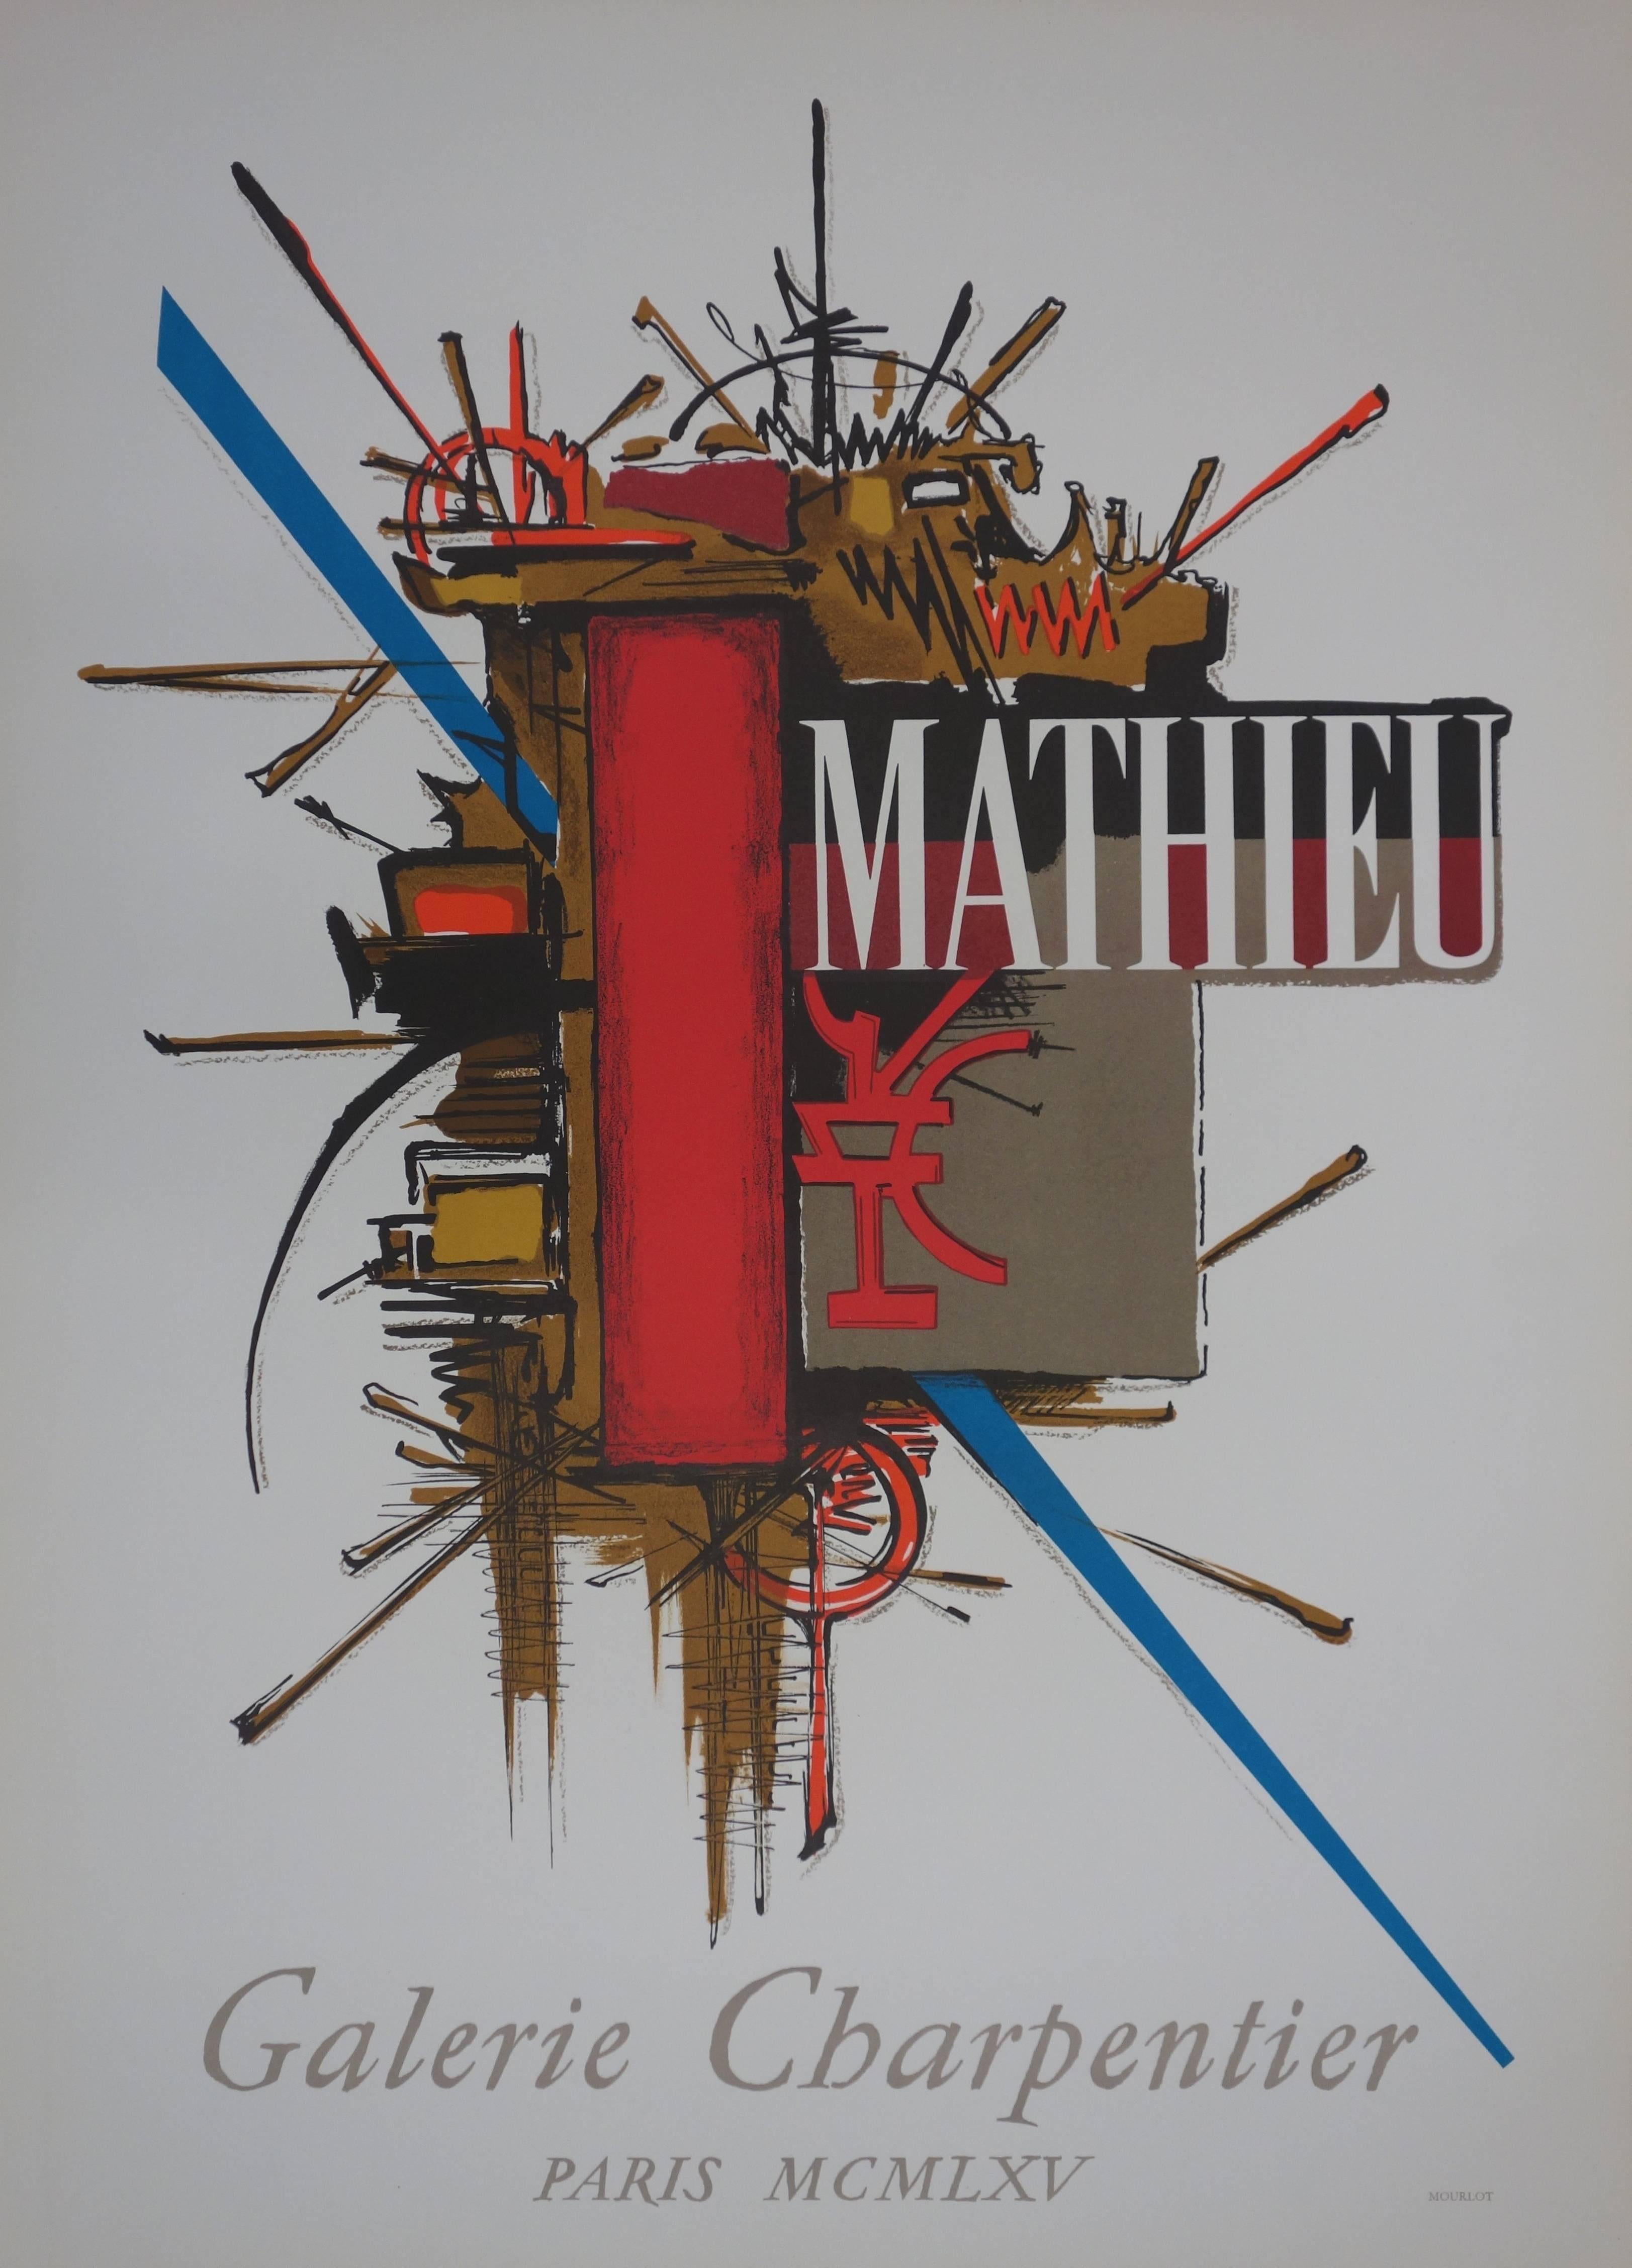 https://a.1stdibscdn.com/georges-mathieu-prints-works-on-paper-abstract-symbols-original-lithograph-mourlot-1965-for-sale/a_4643/a_78054821617008076687/DSC03486_master.JPG